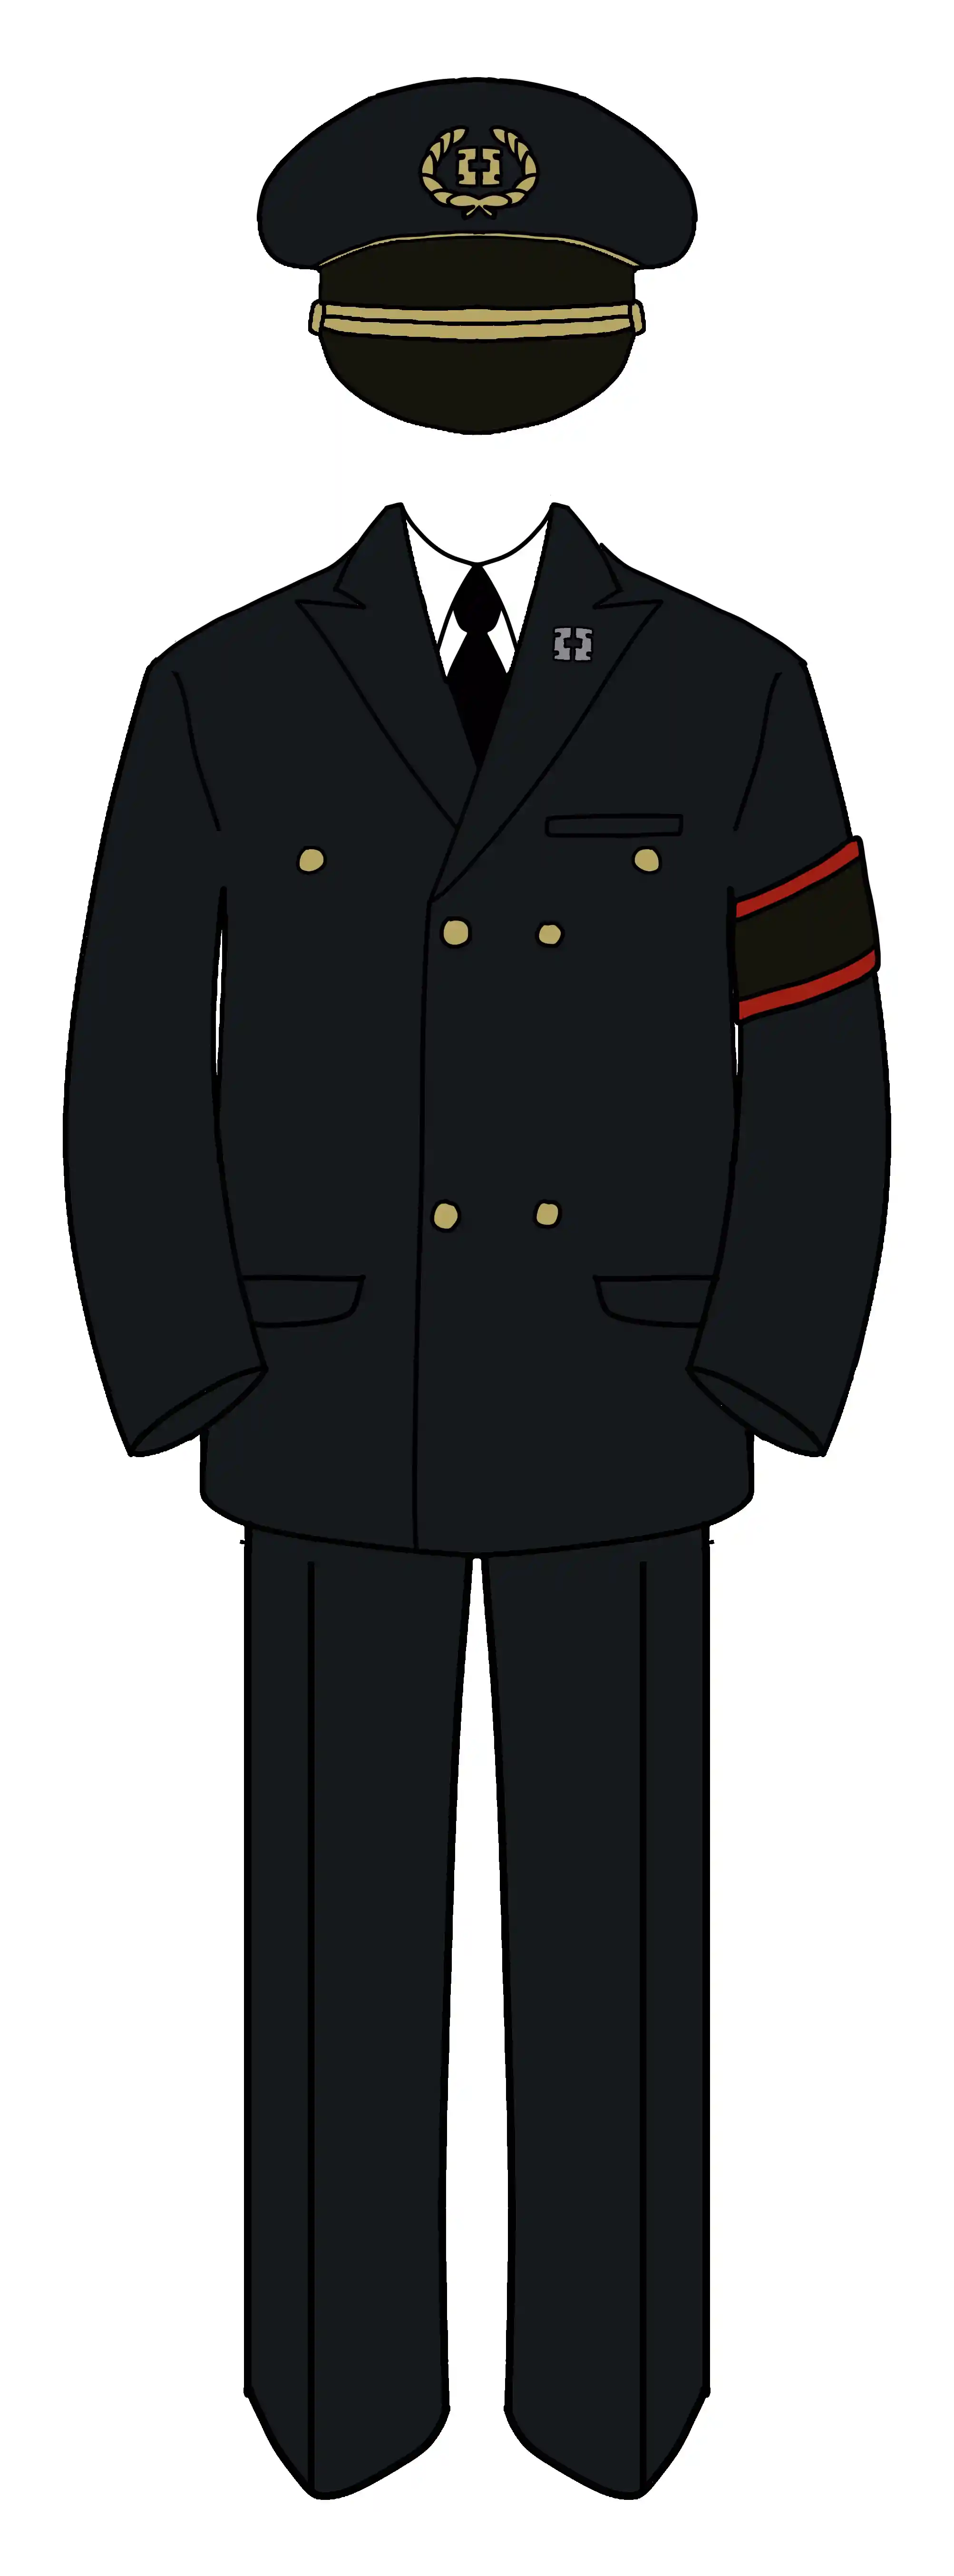 THP_Uniform.jpg